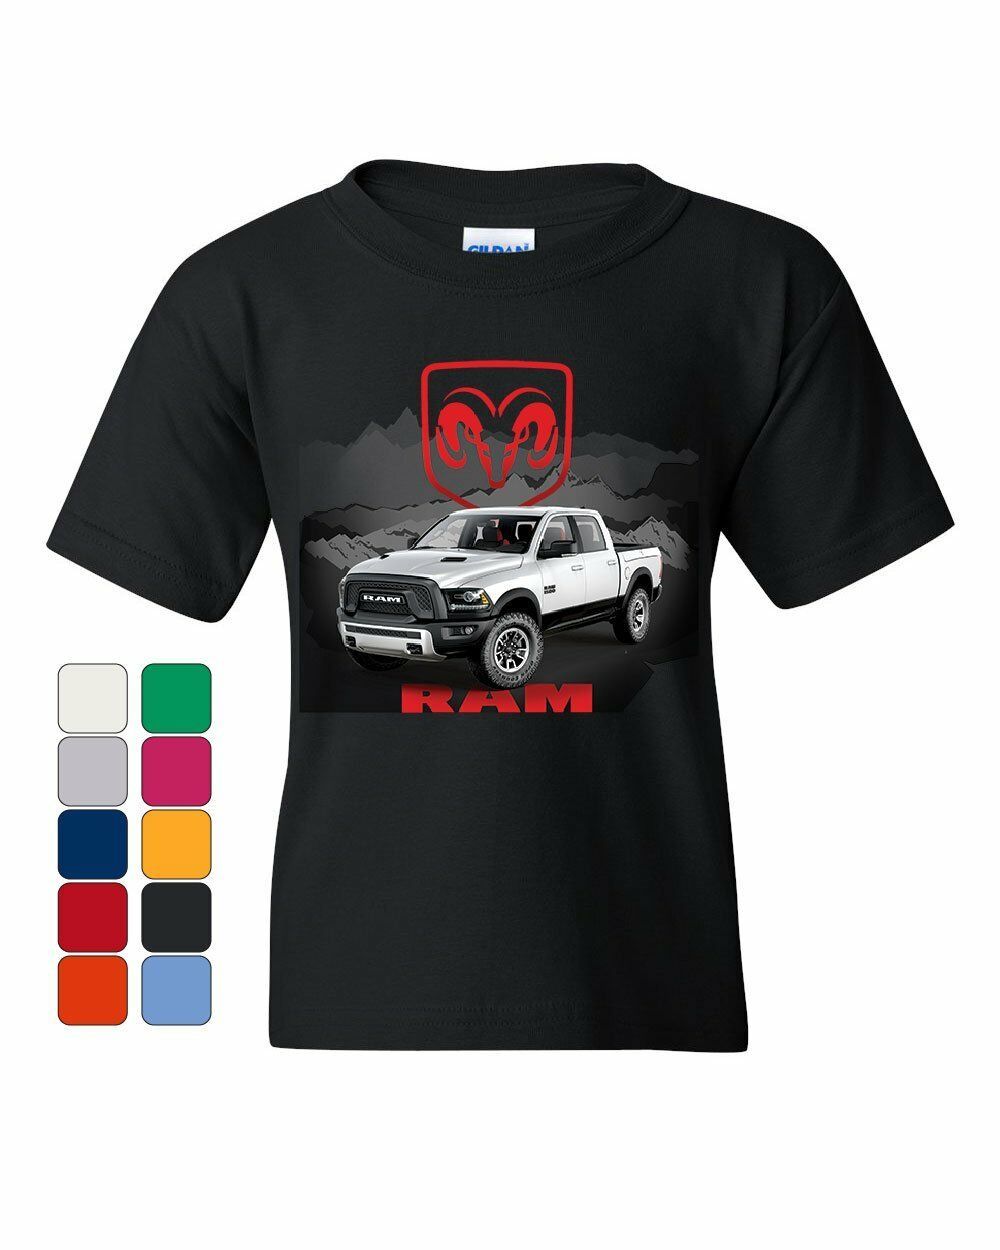 Dodge Ram White Truck Youth T-Shirt Heavy Duty Pickup Truck Kids Tee